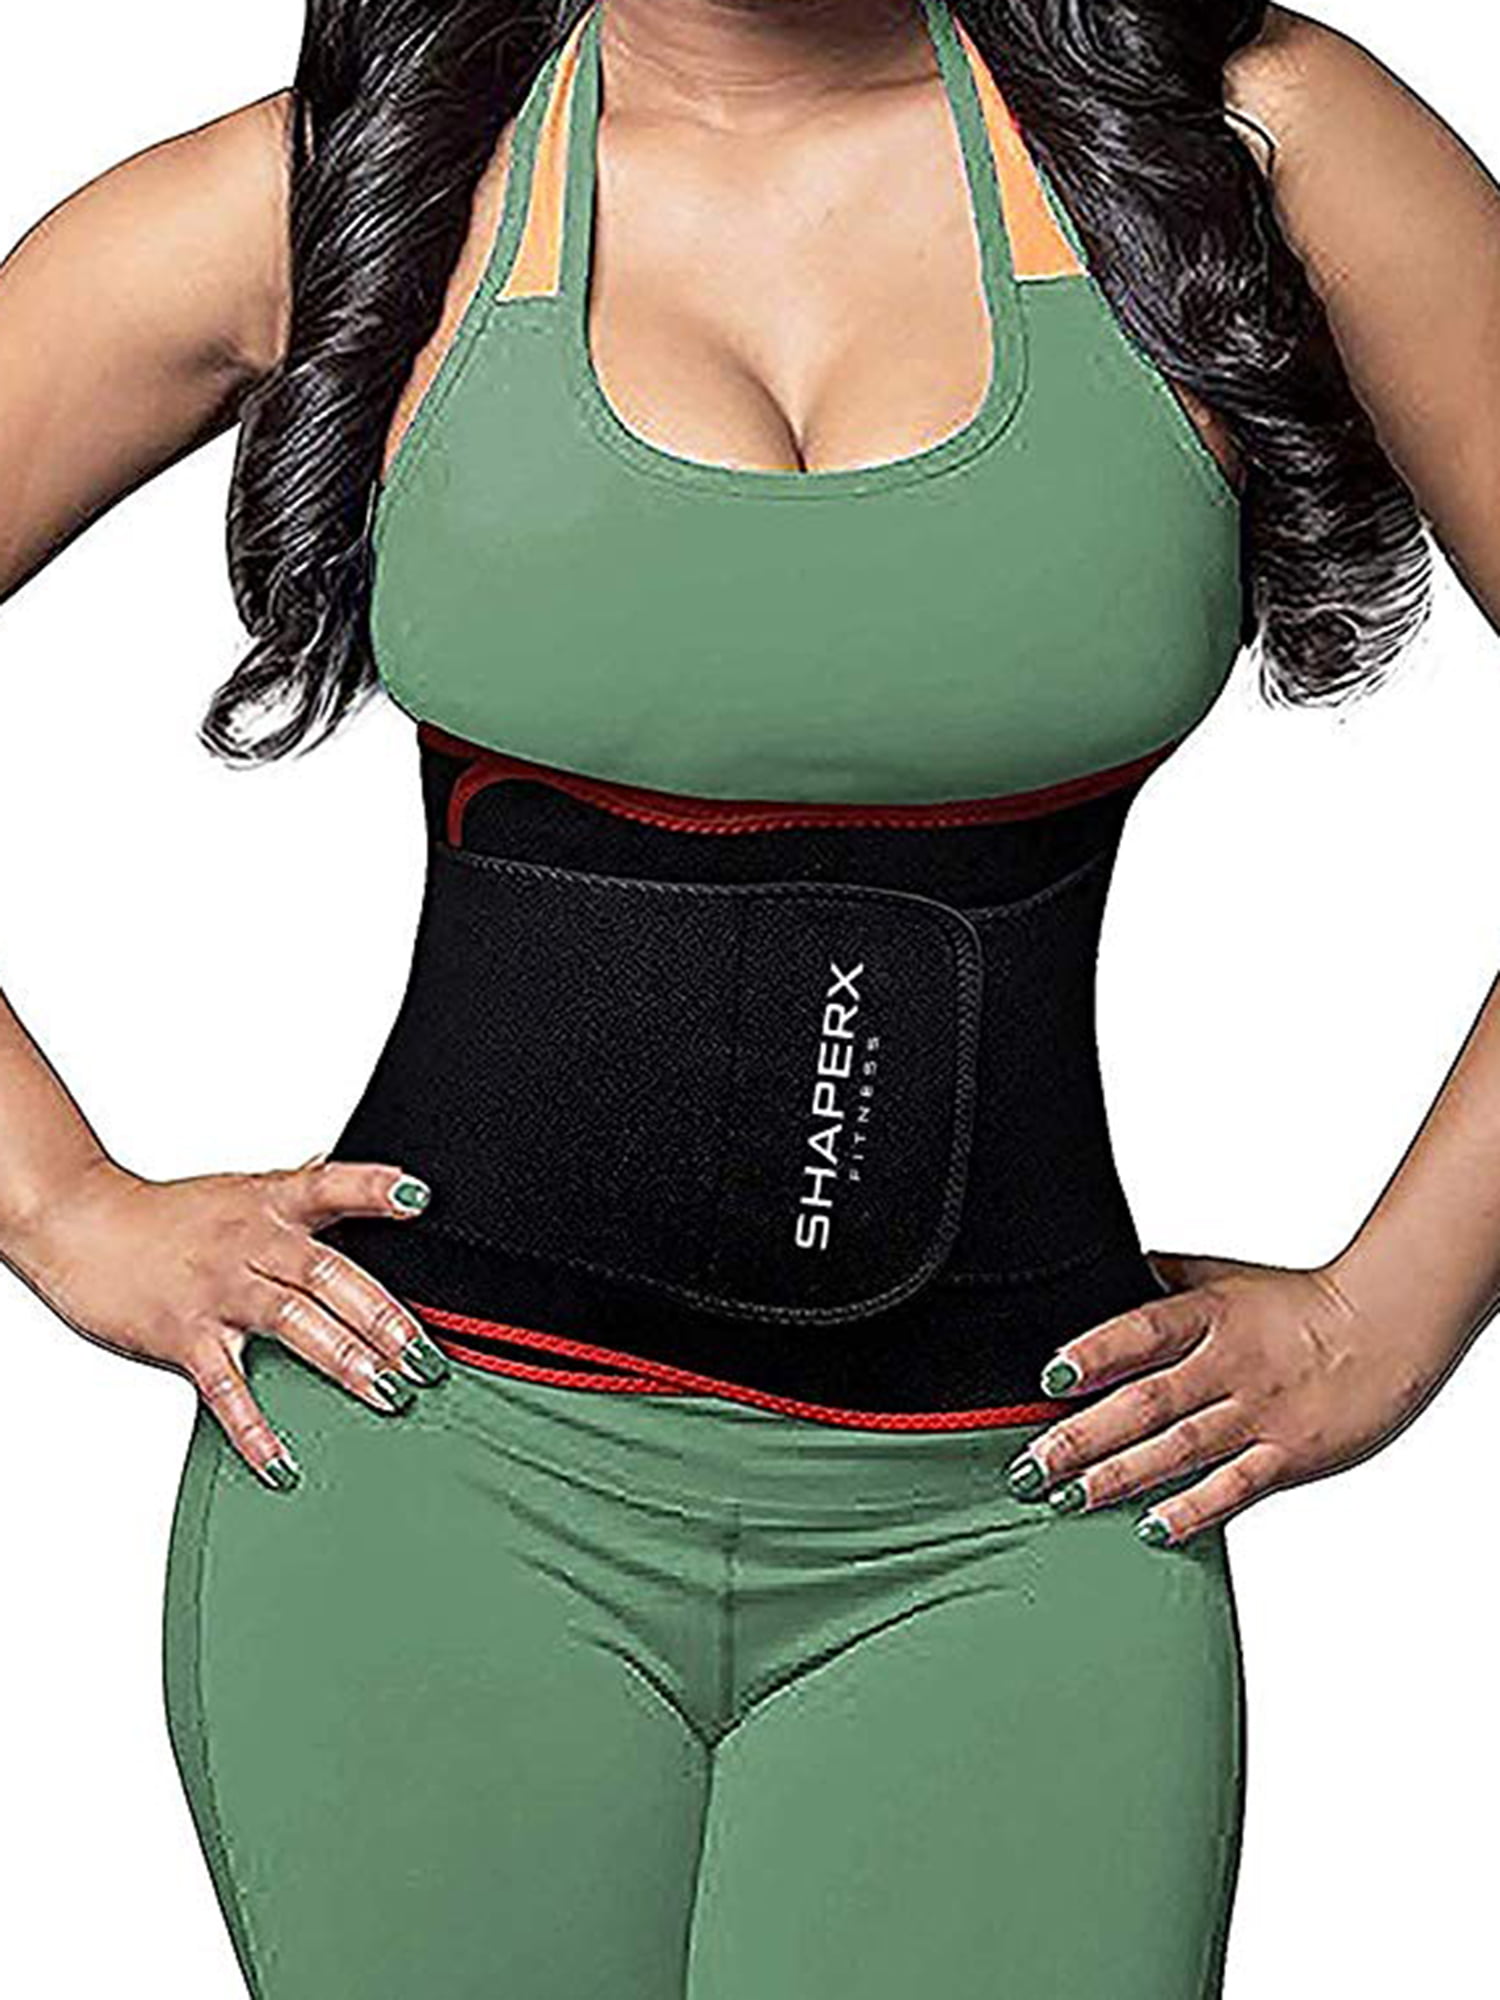 Men Women Weight Loss Wasit Trainer Tummy Control Body Shaper Belt Gym Sweat UK 